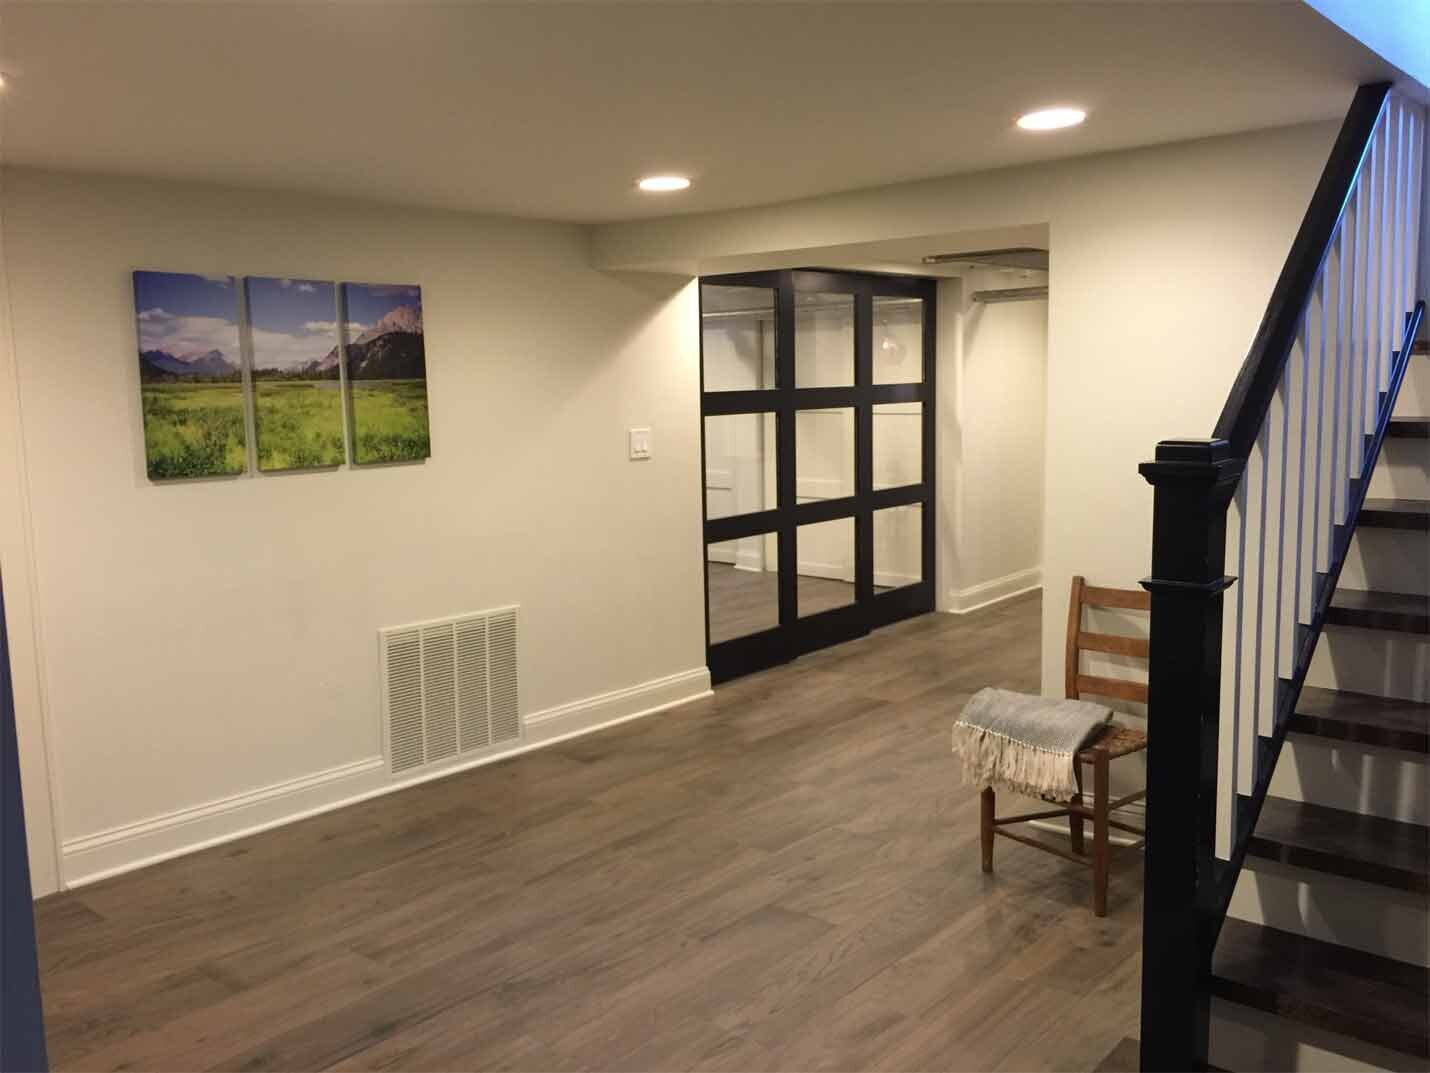 Modern basement design with hardwood floors